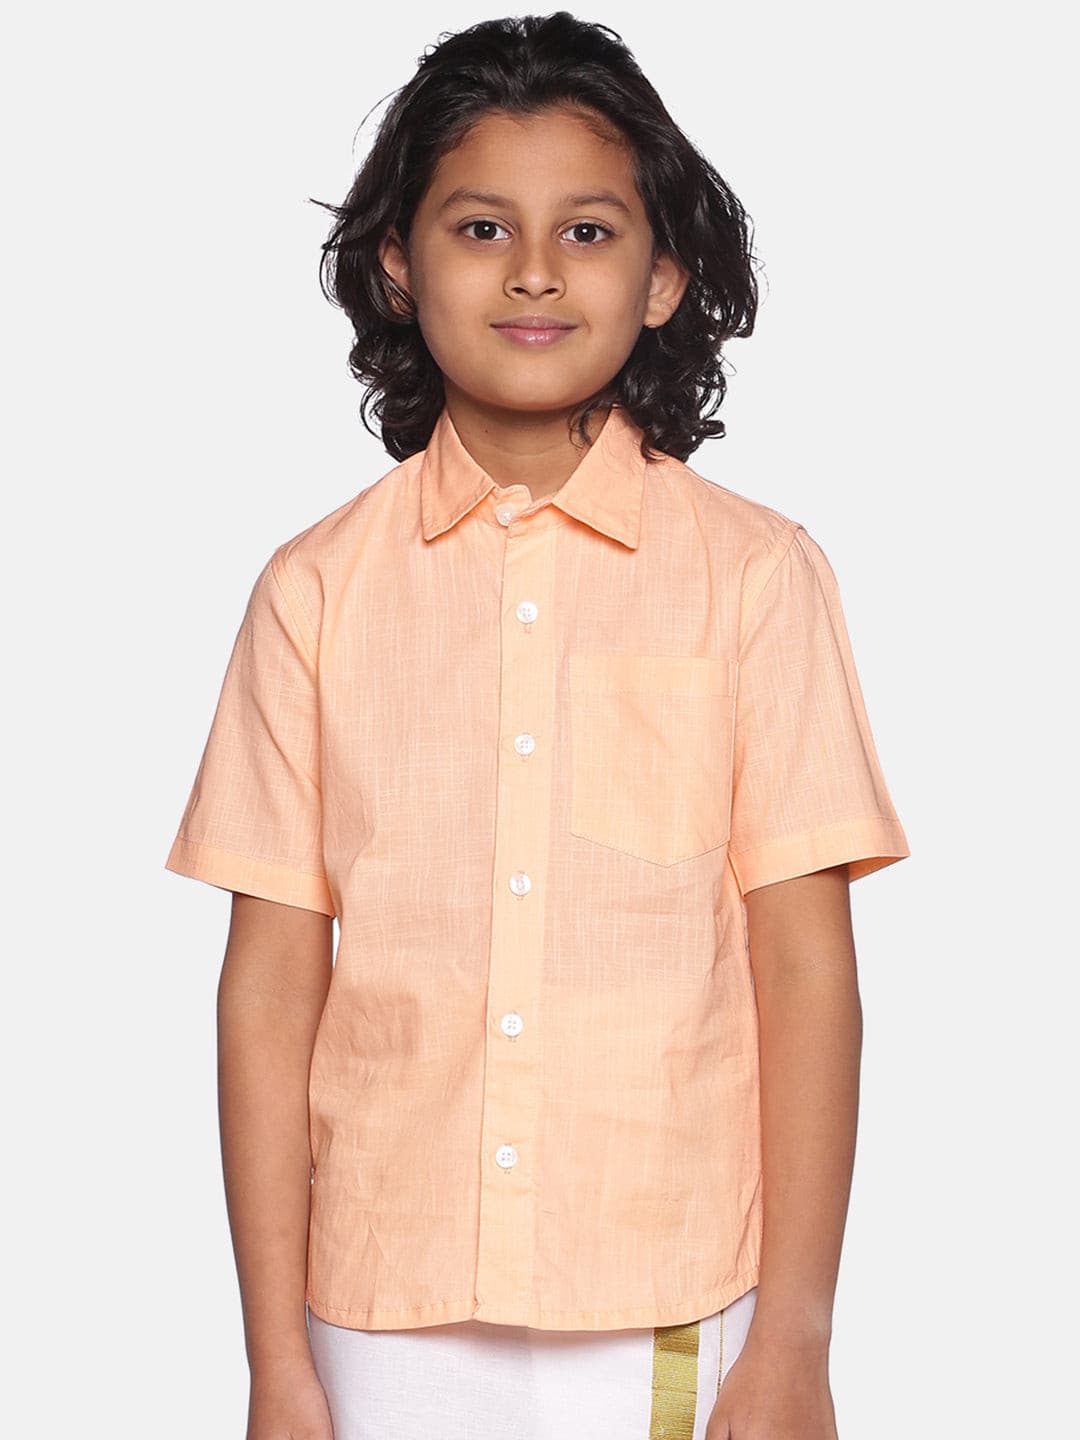 Boys Orange Colour Cotton Shirt